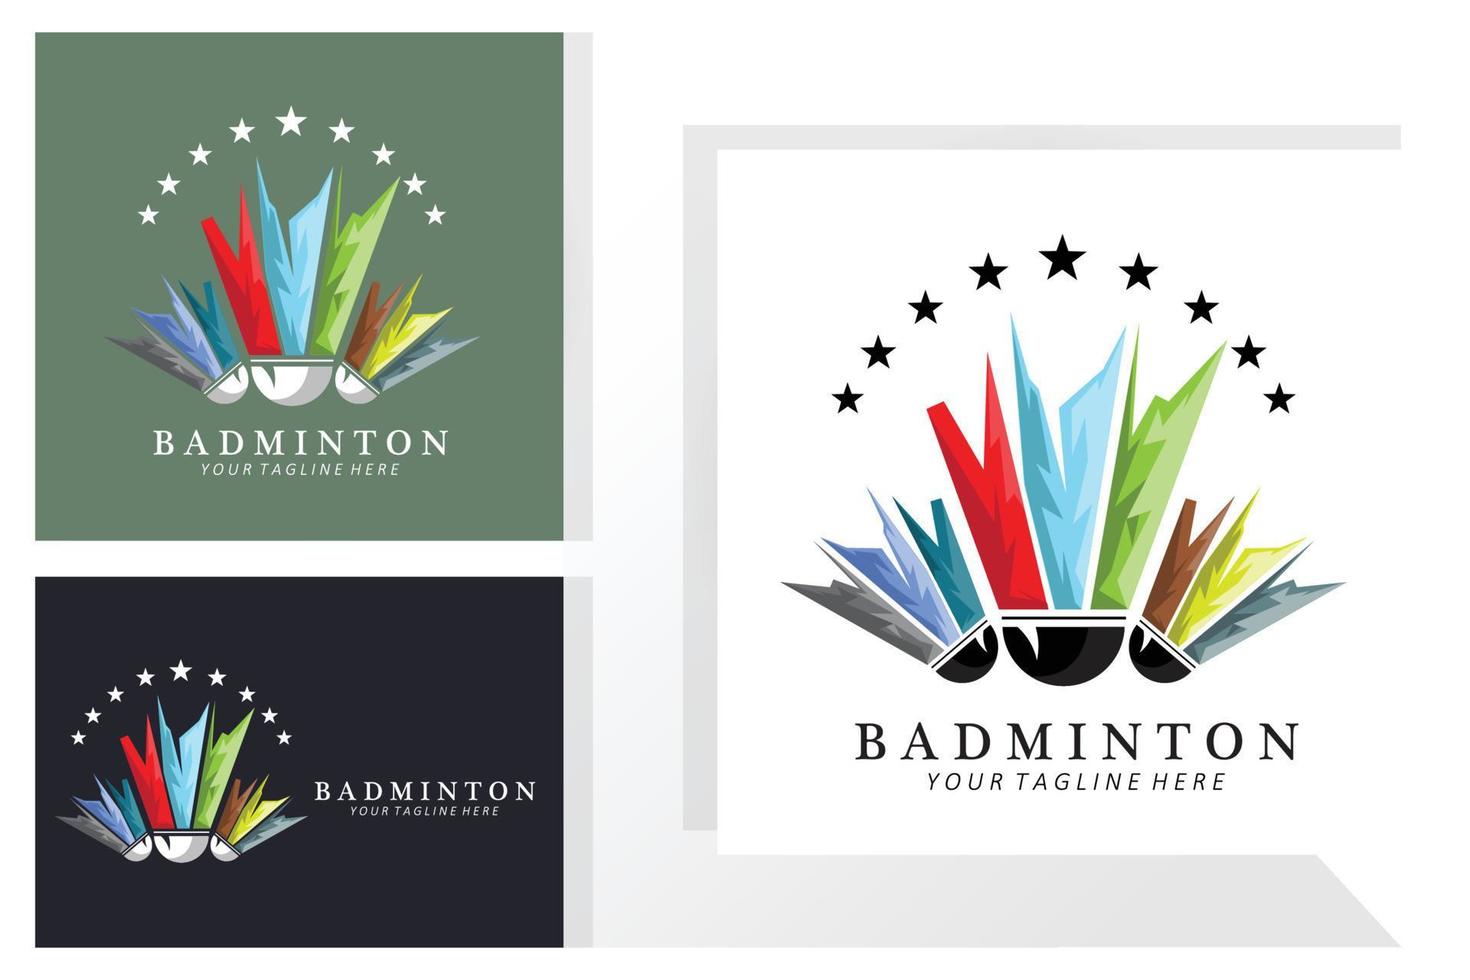 design de logotipo de badminton, ícone vetorial para competições de atletismo vetor